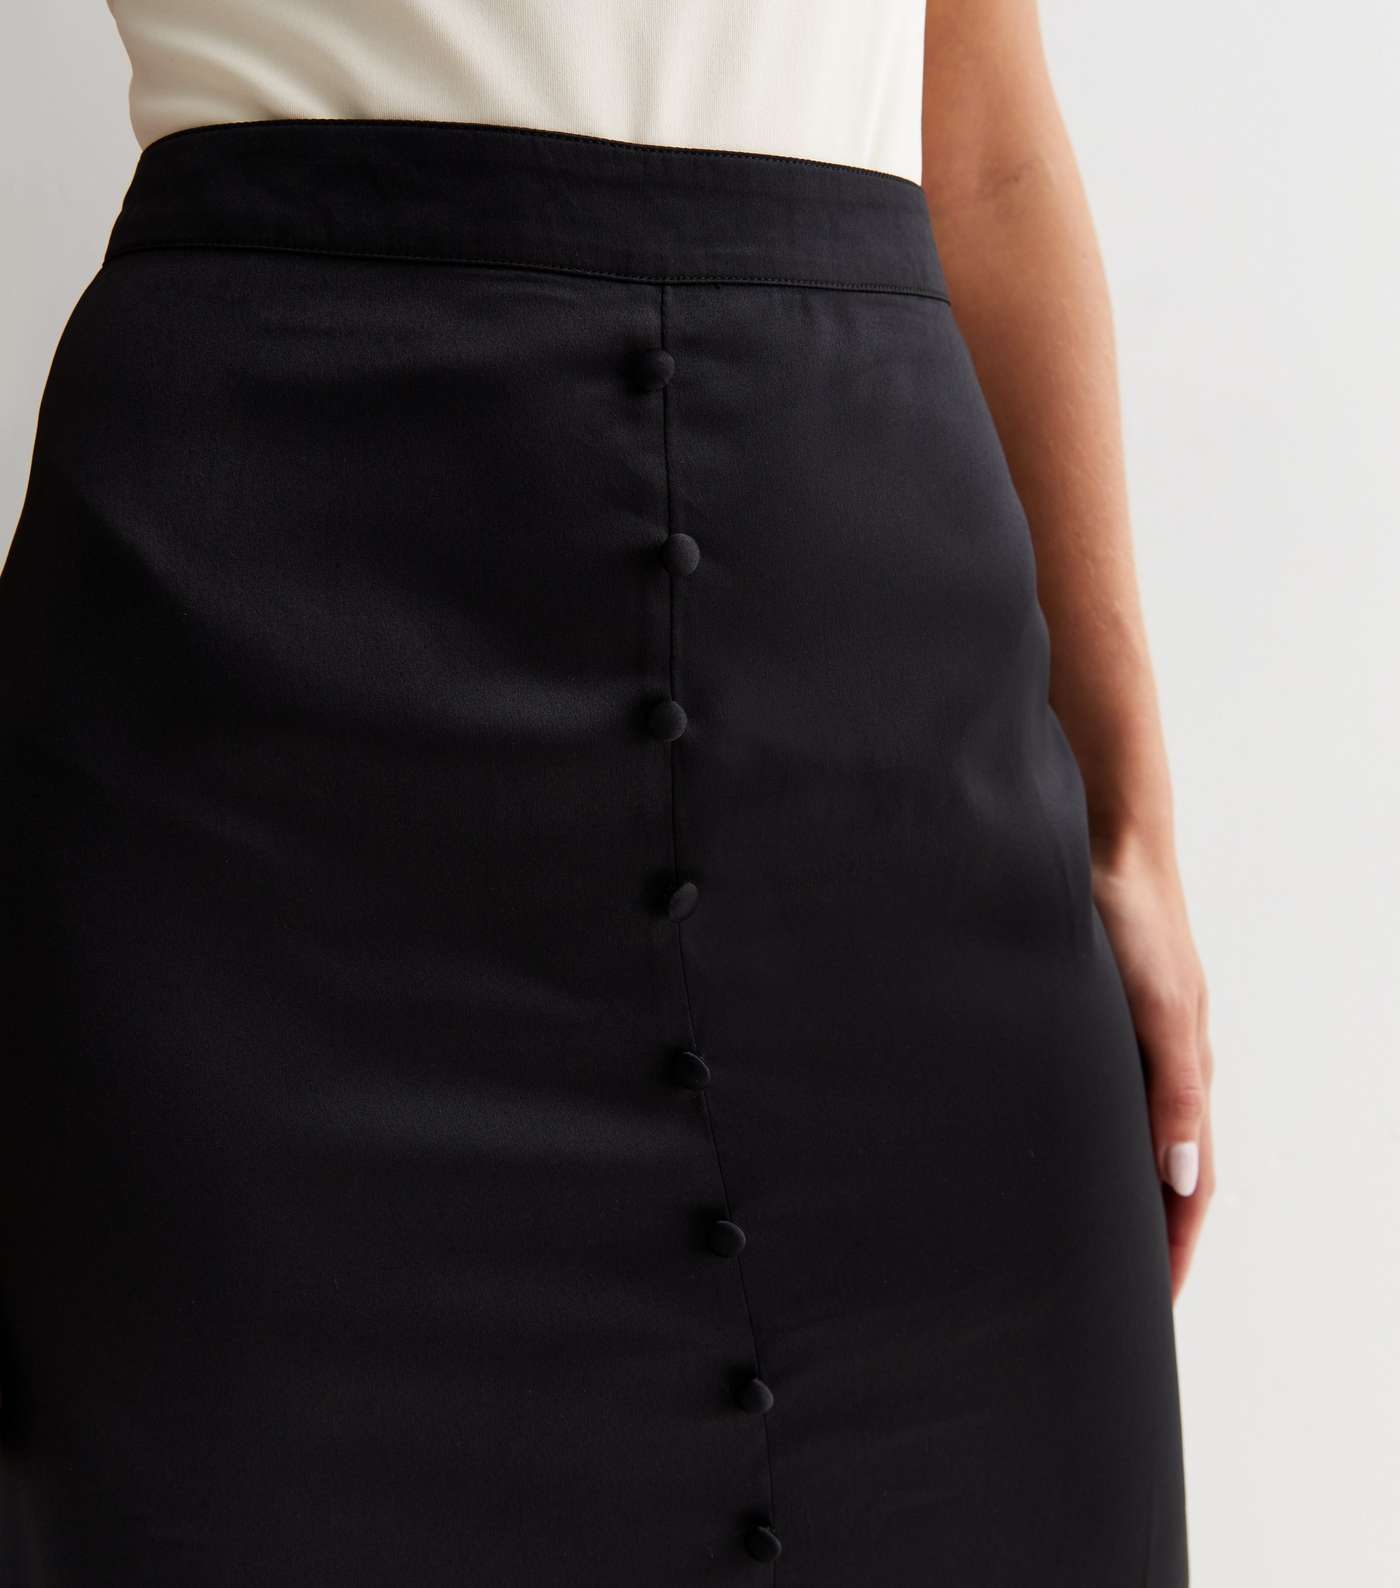 Petite Black Satin Button Midi Skirt Image 3